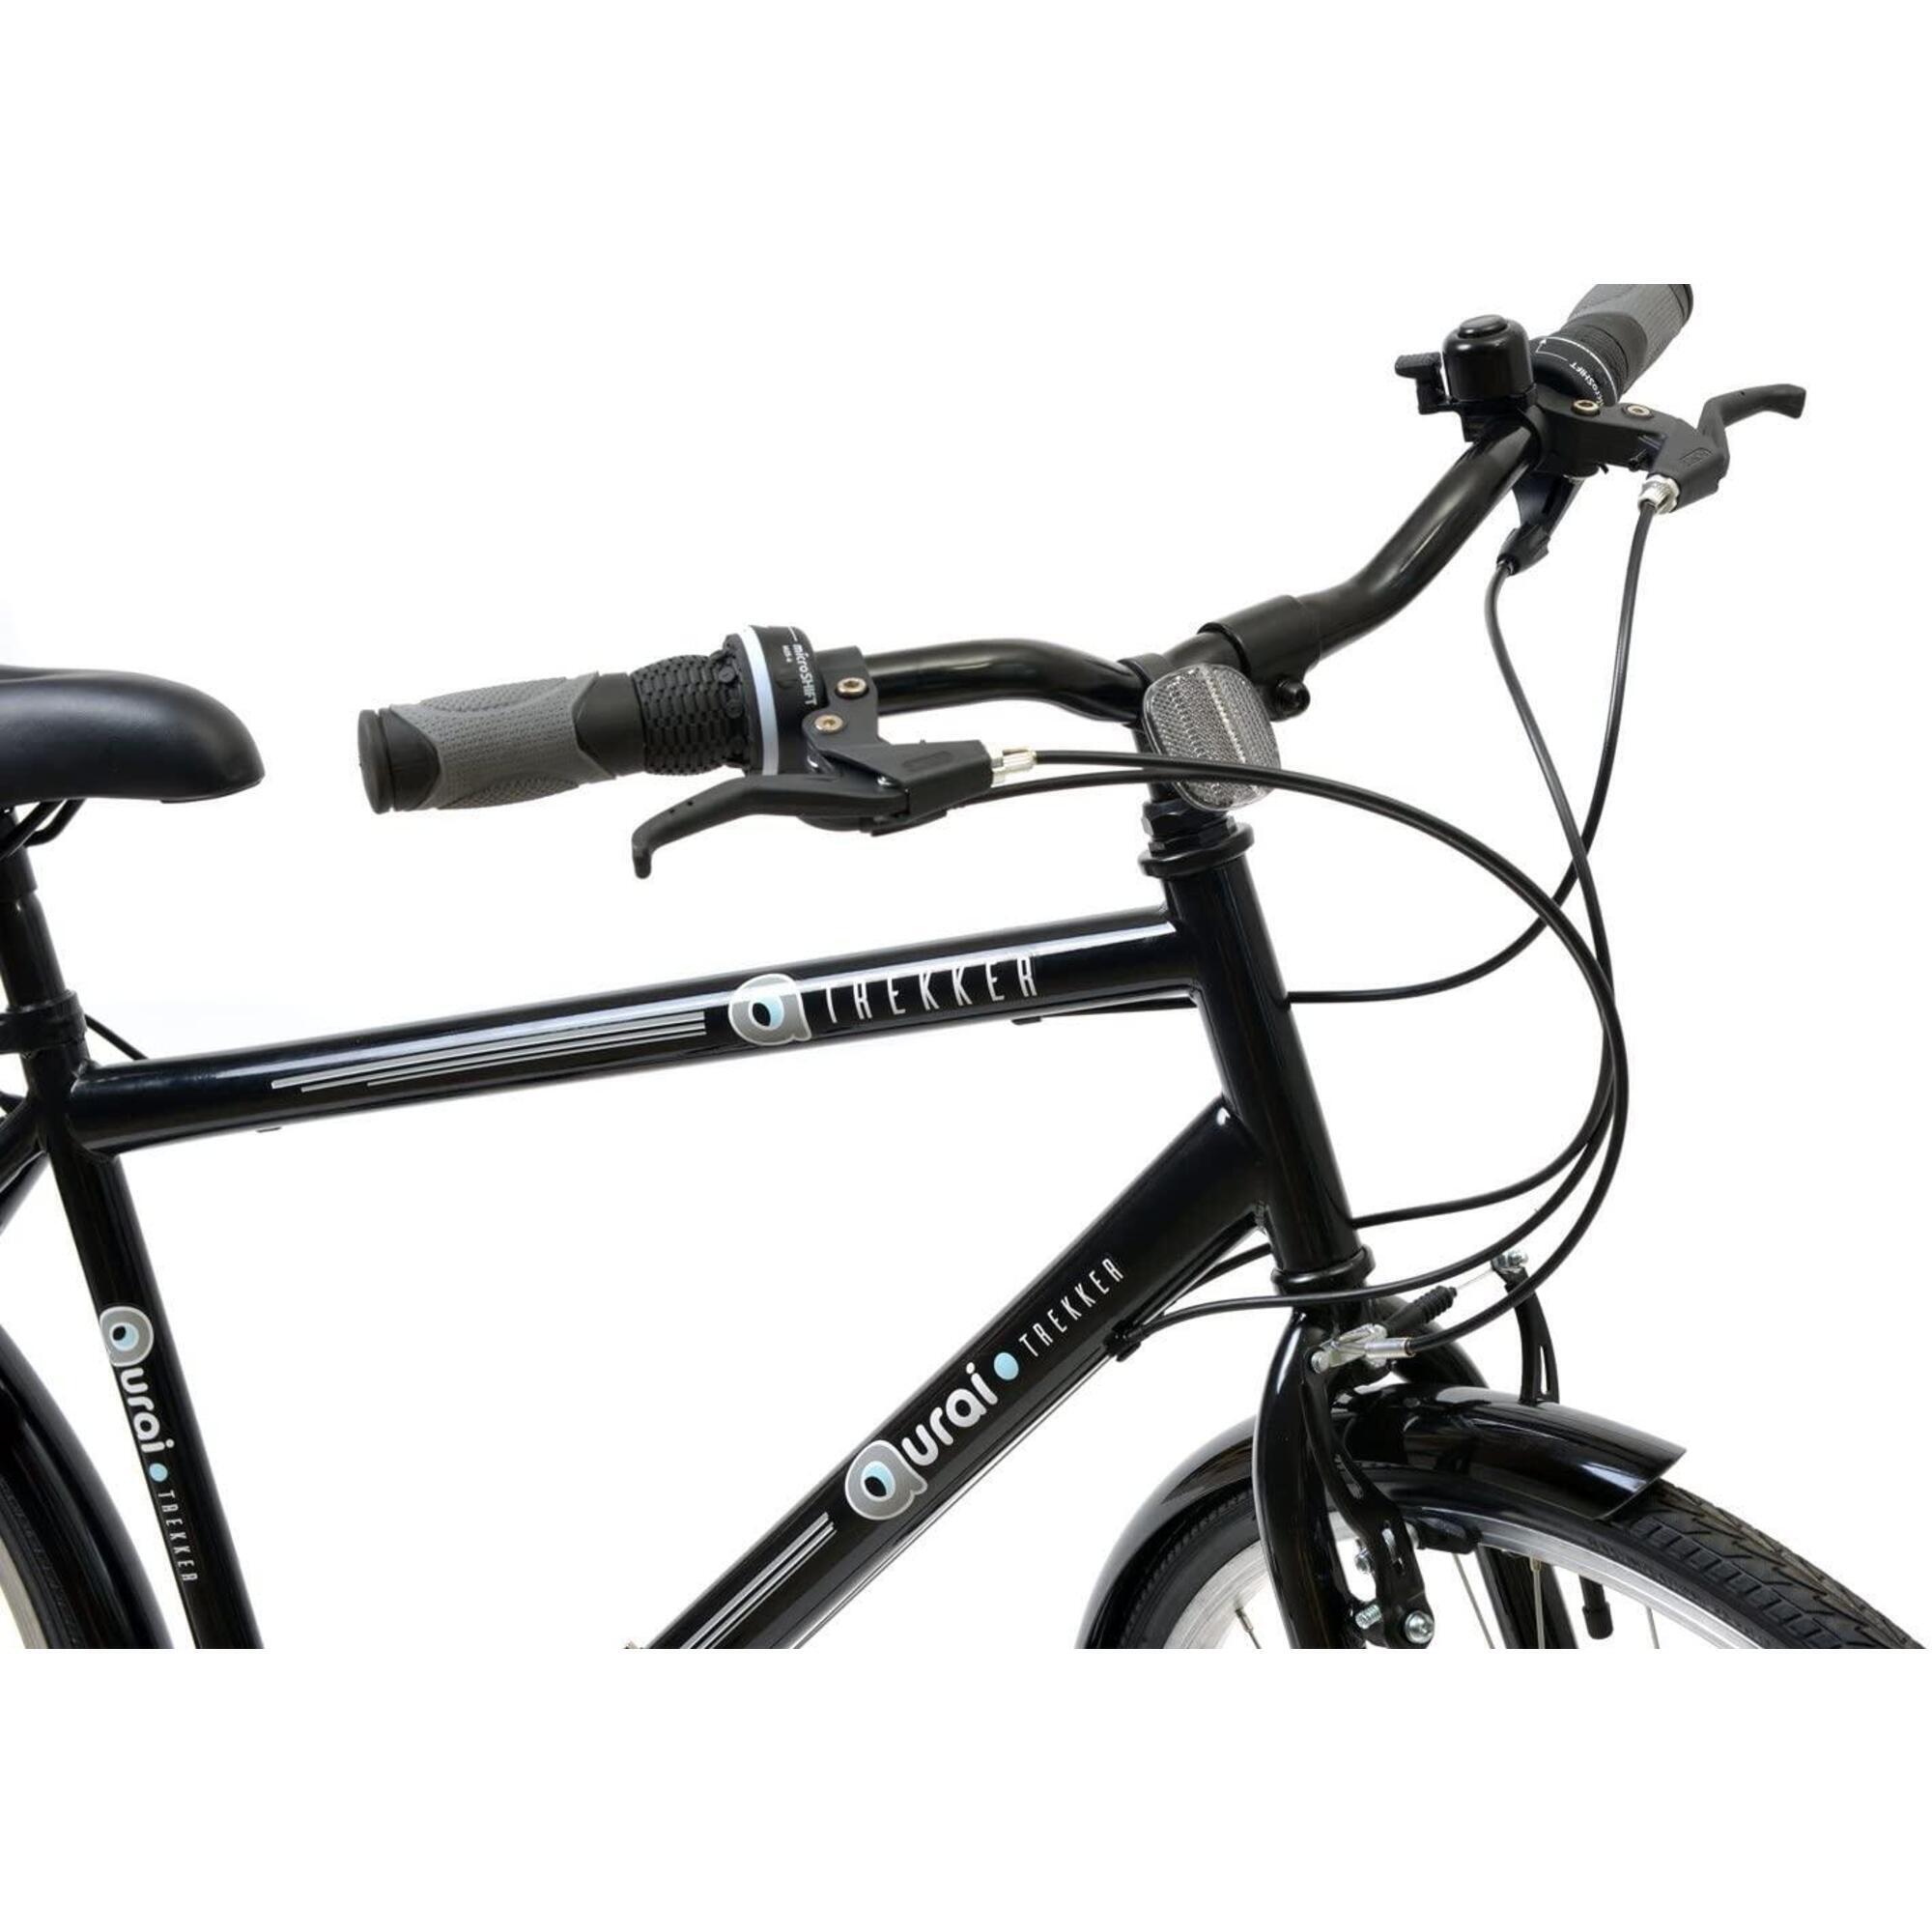 Aurai Trekker Crossbar Hybrid Bicycle, 700c Wheel, 18 Speed - Black 2/5